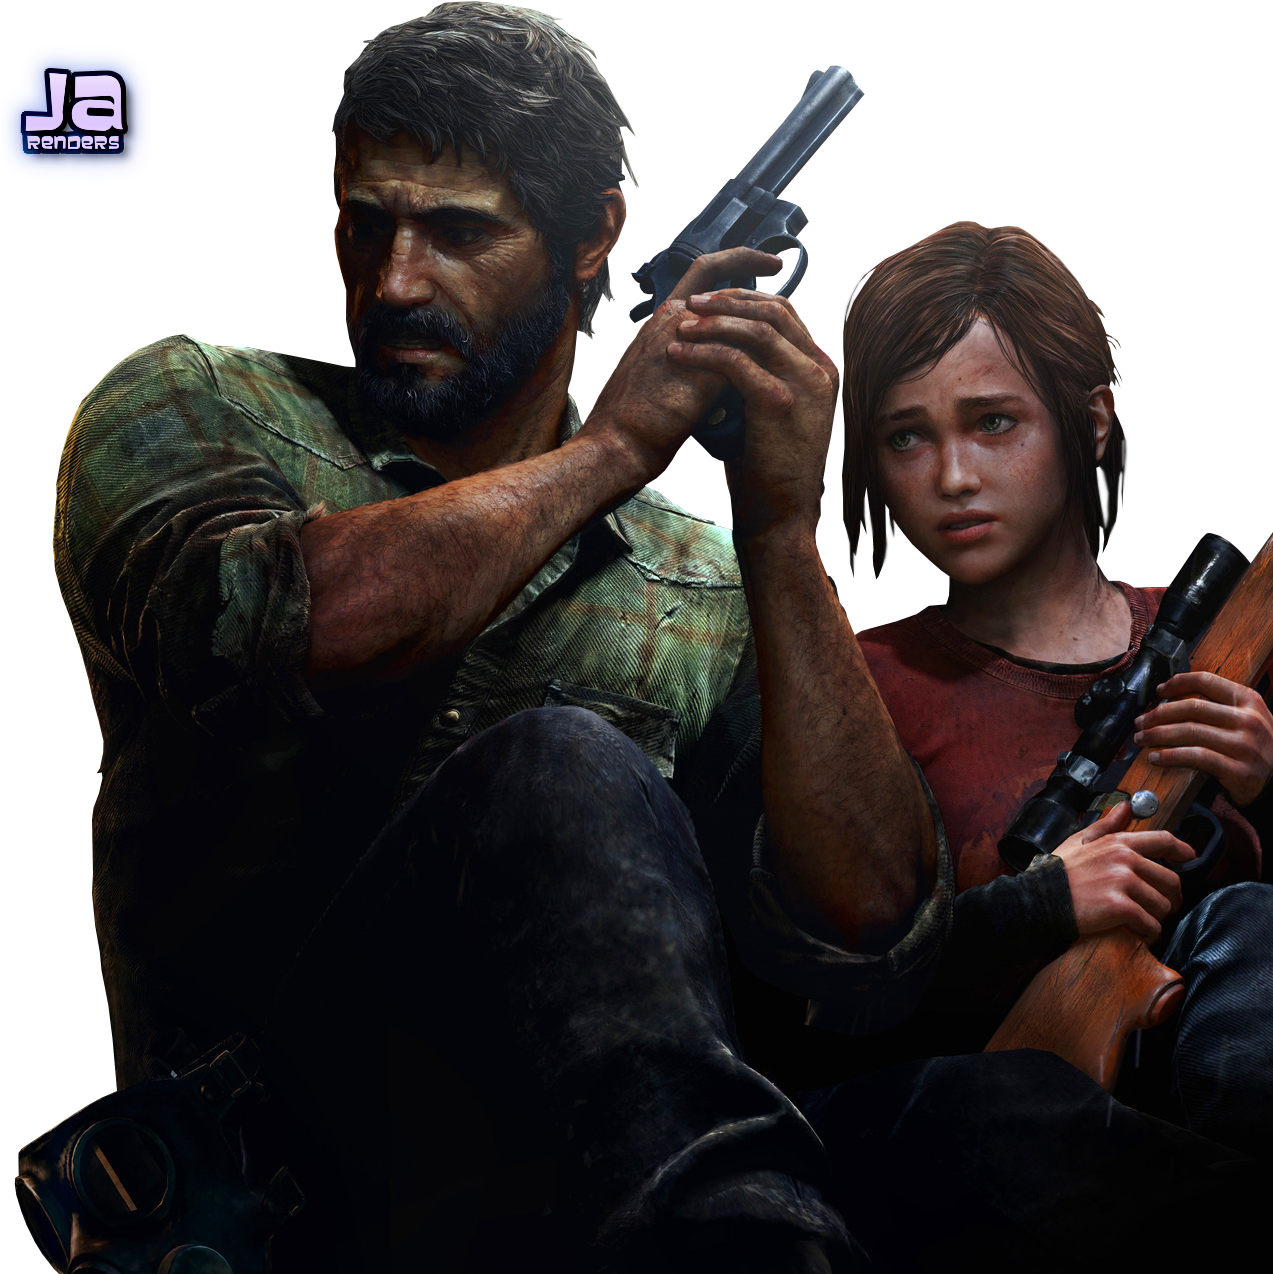 A Man And A Girl Holding Guns